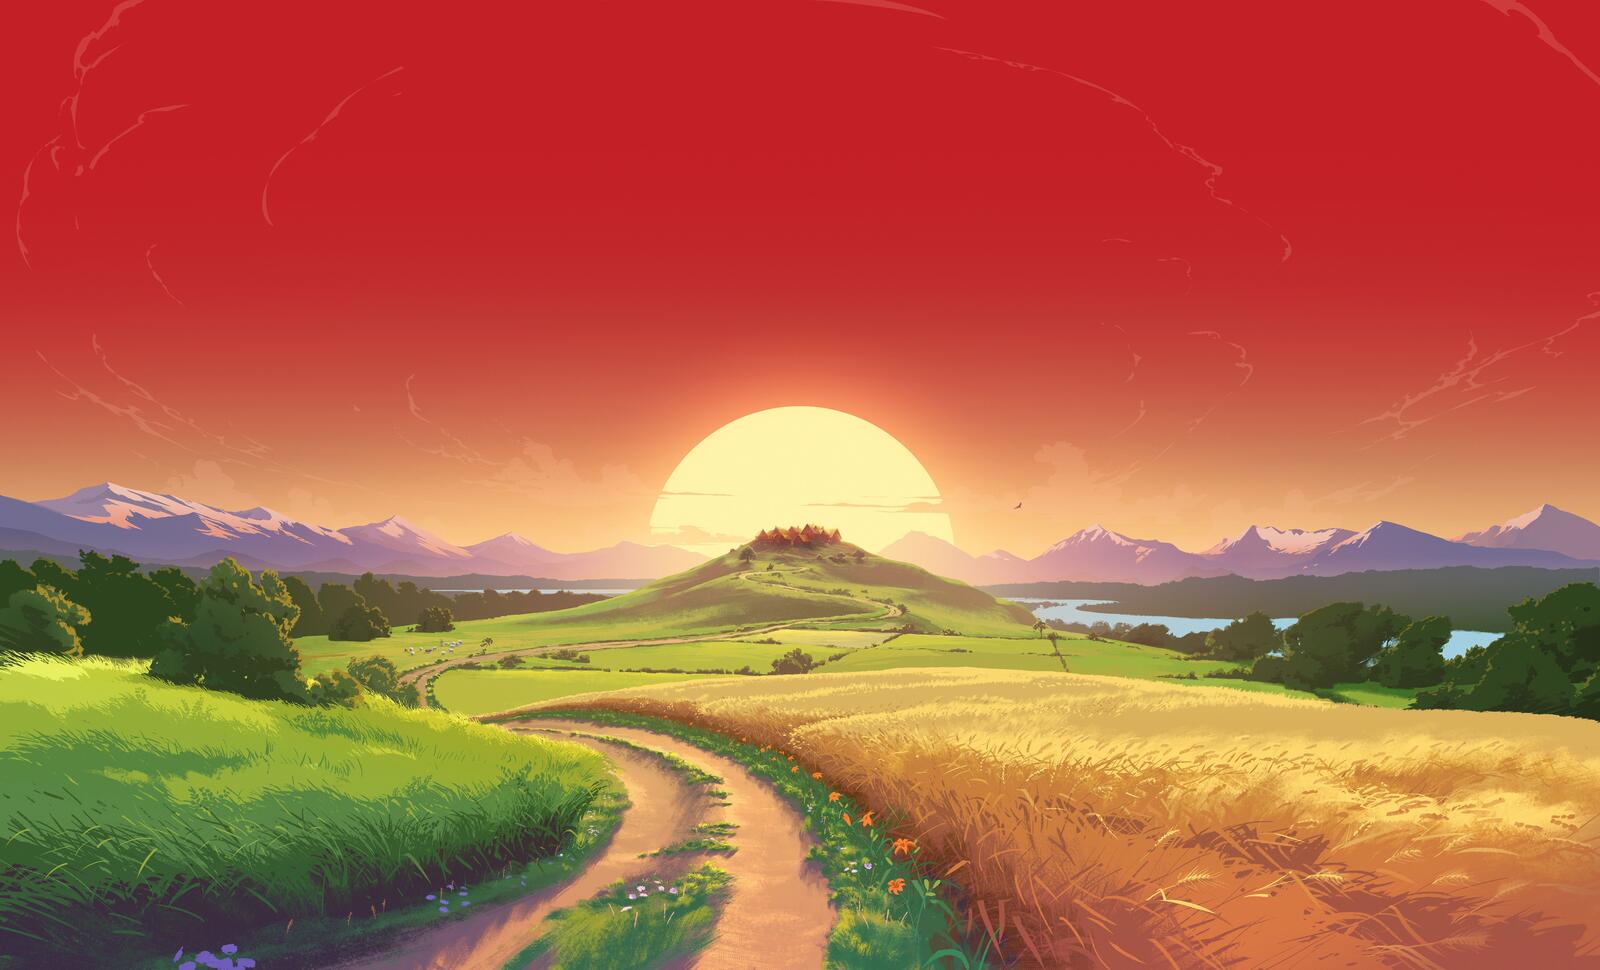 Wallpapers sunrise field illustration on the desktop